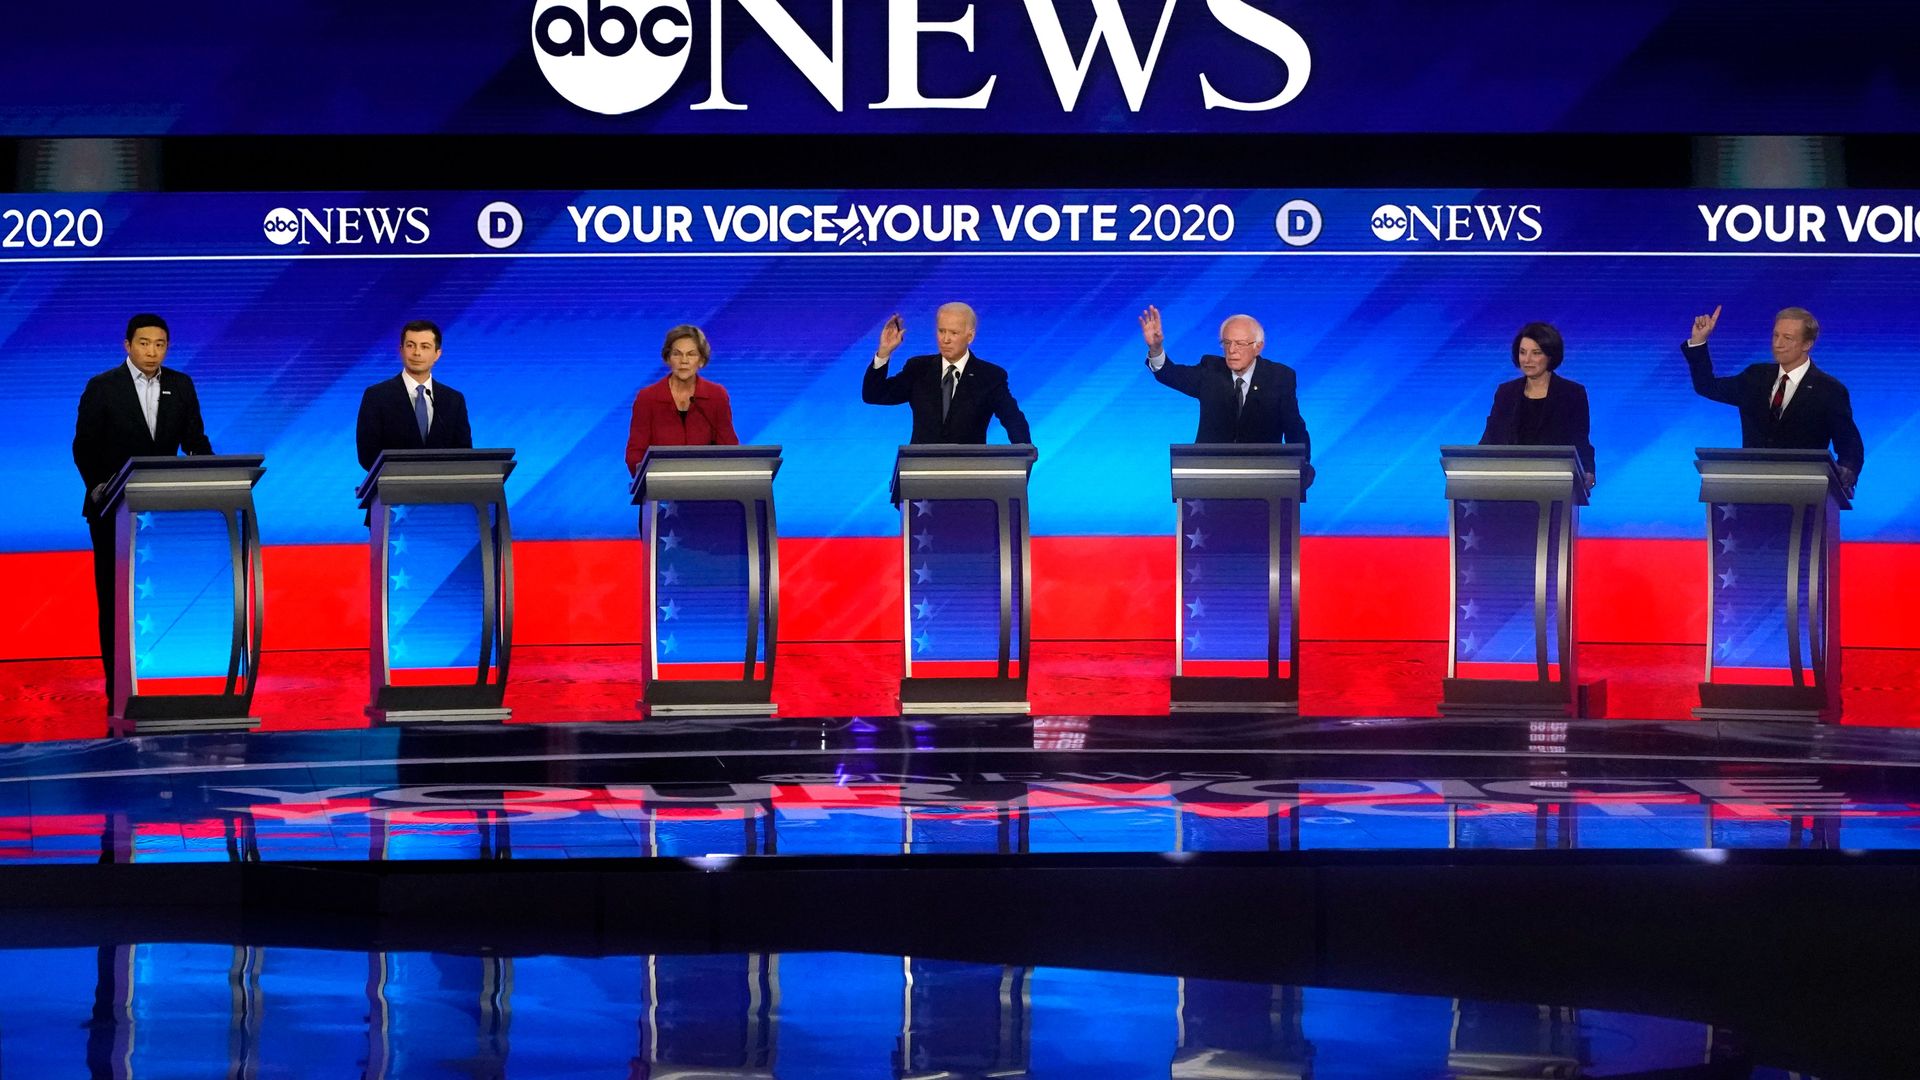 The 2020 Democratic Debate stage